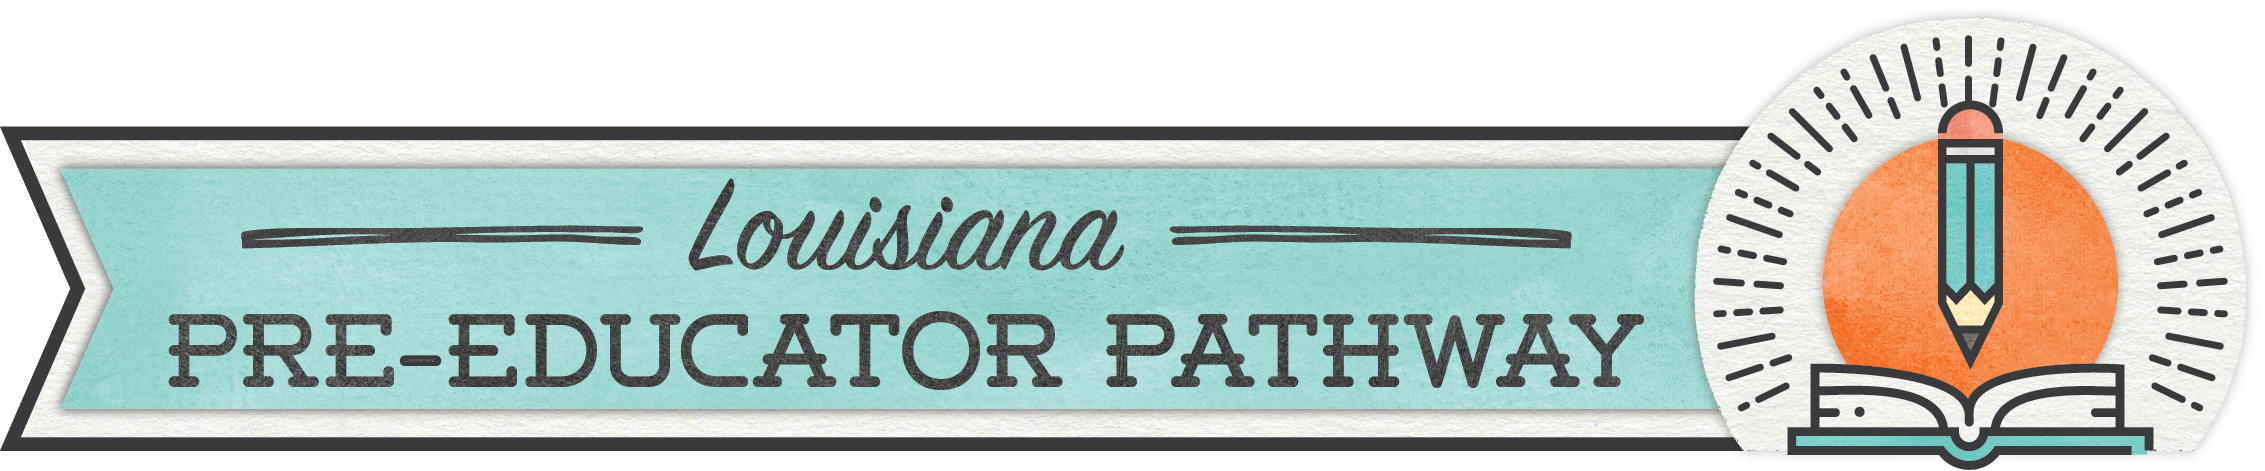 Louisiana Pre-Educator Pathway